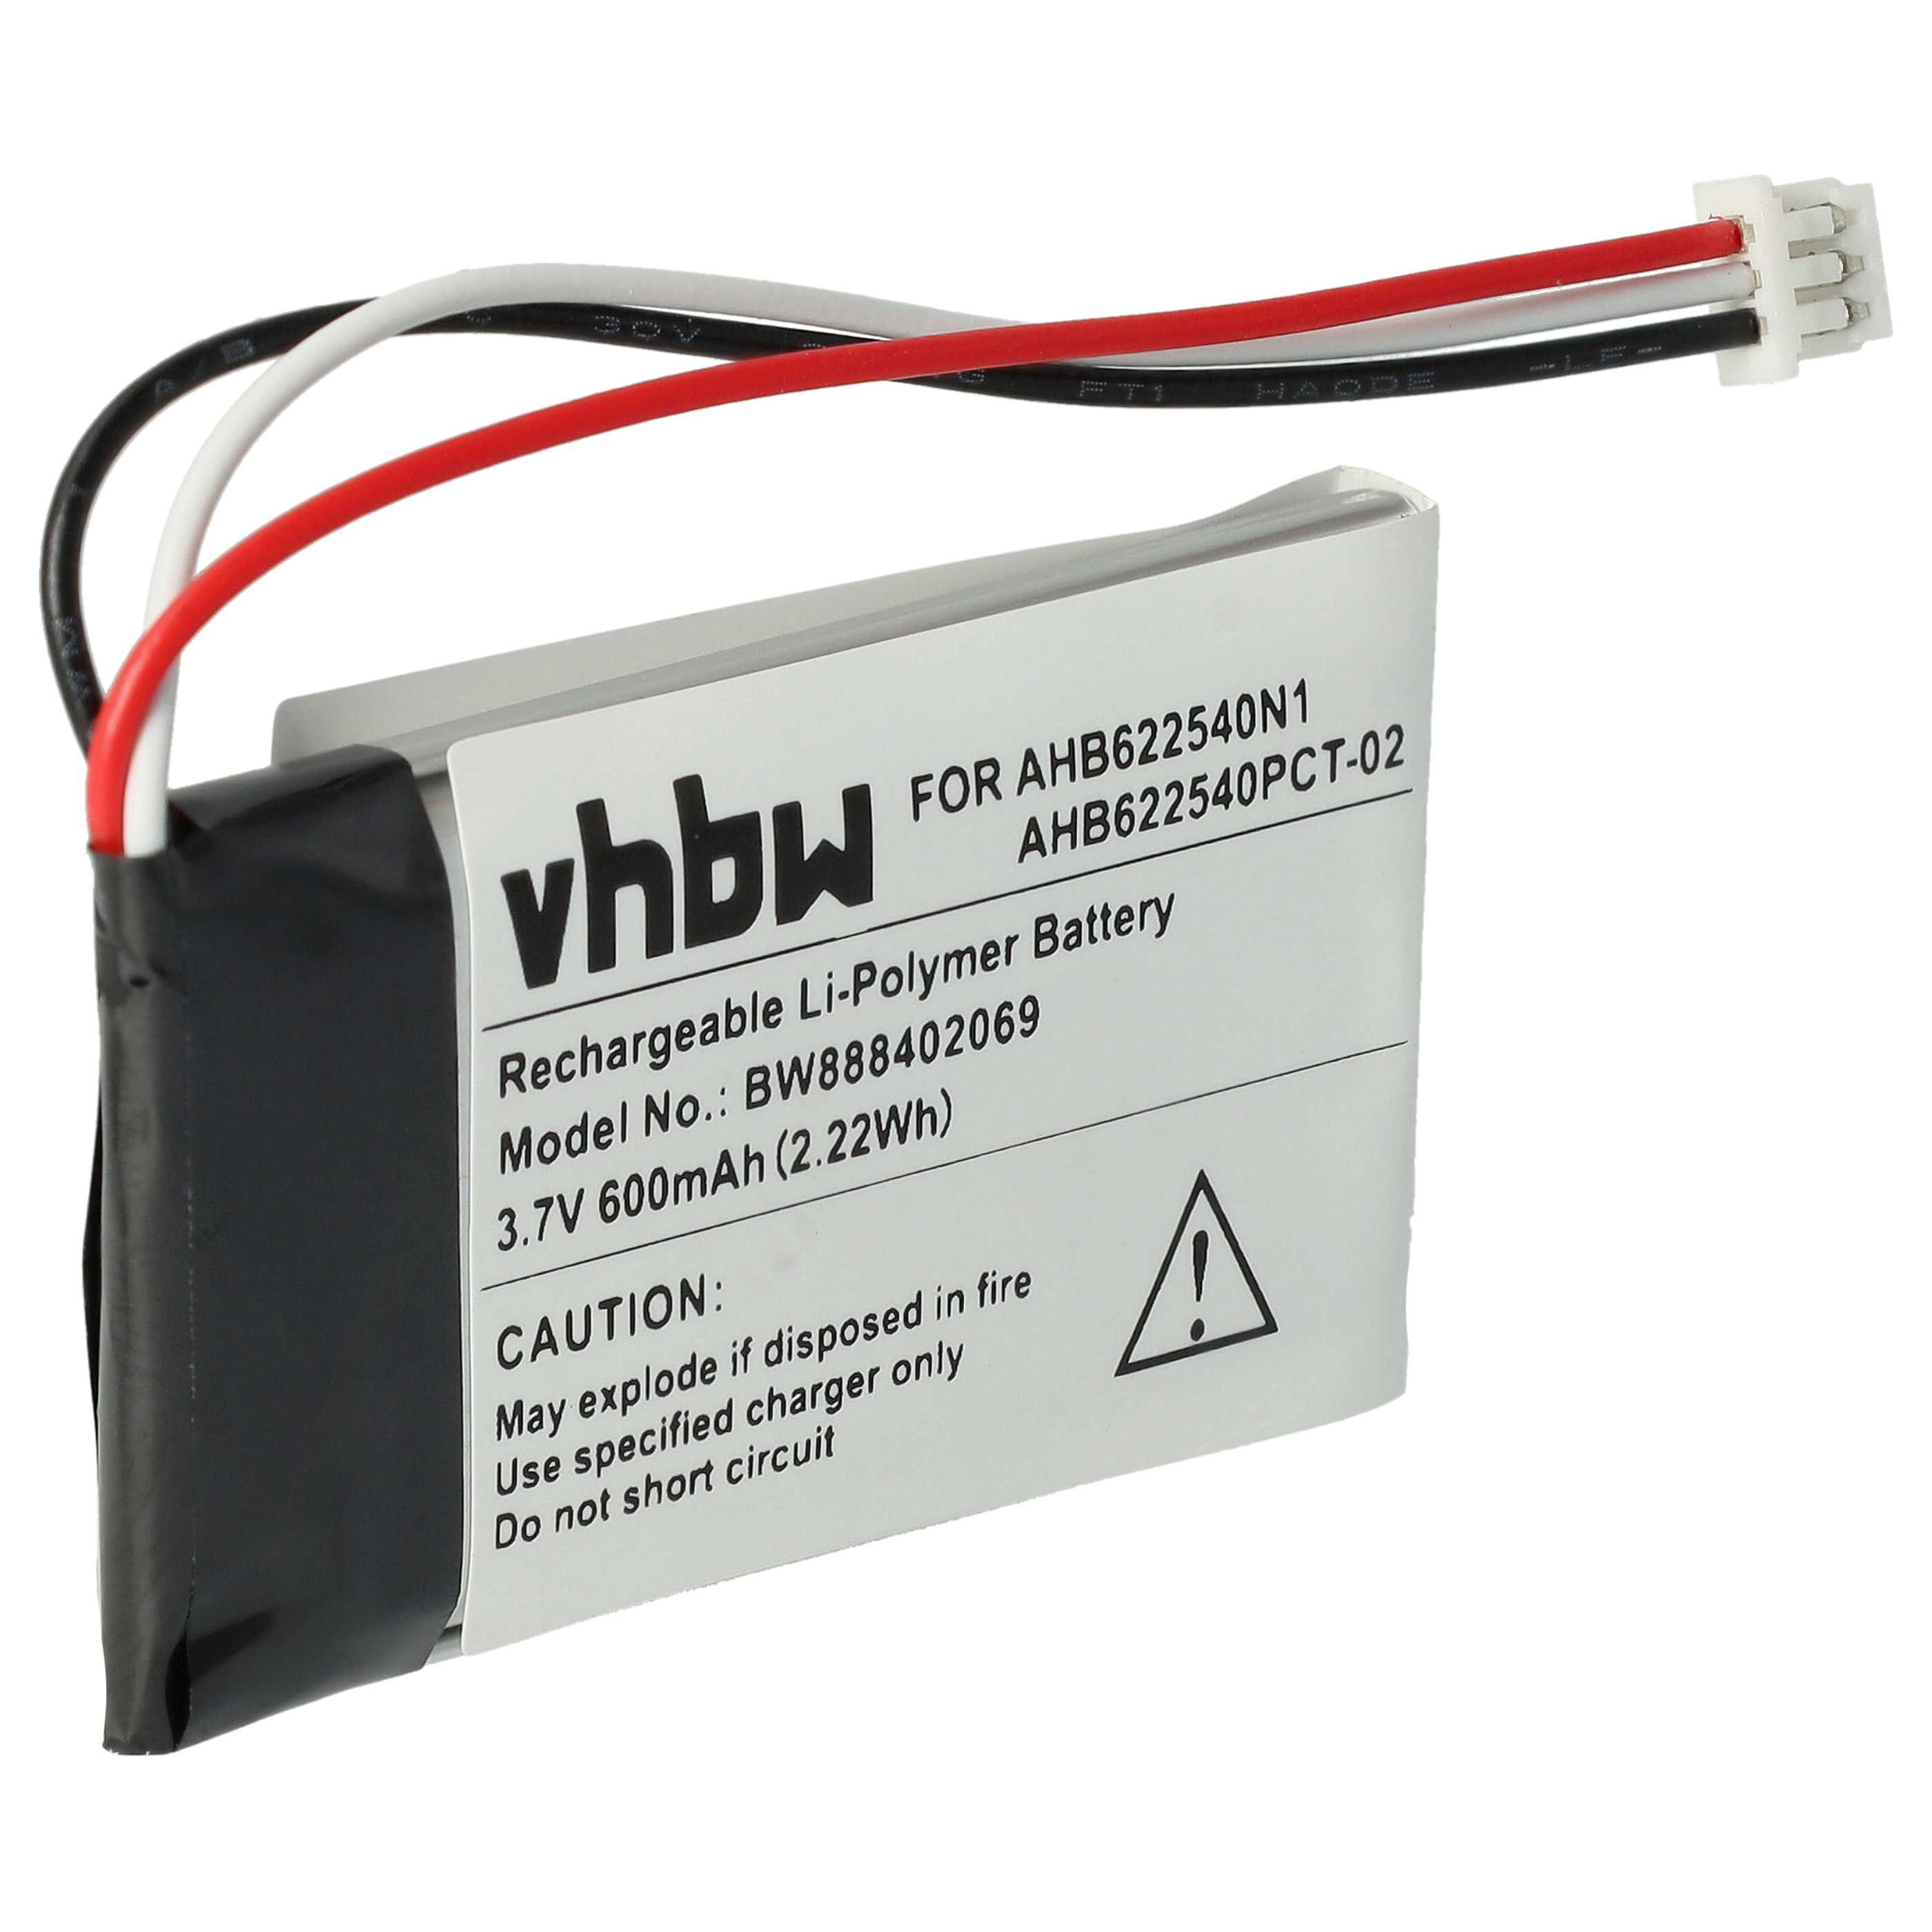 Wireless Headset Battery Replacement for Sennheiser 564546, AHB622540N1 - 600 mAh 3.7 V Li-polymer